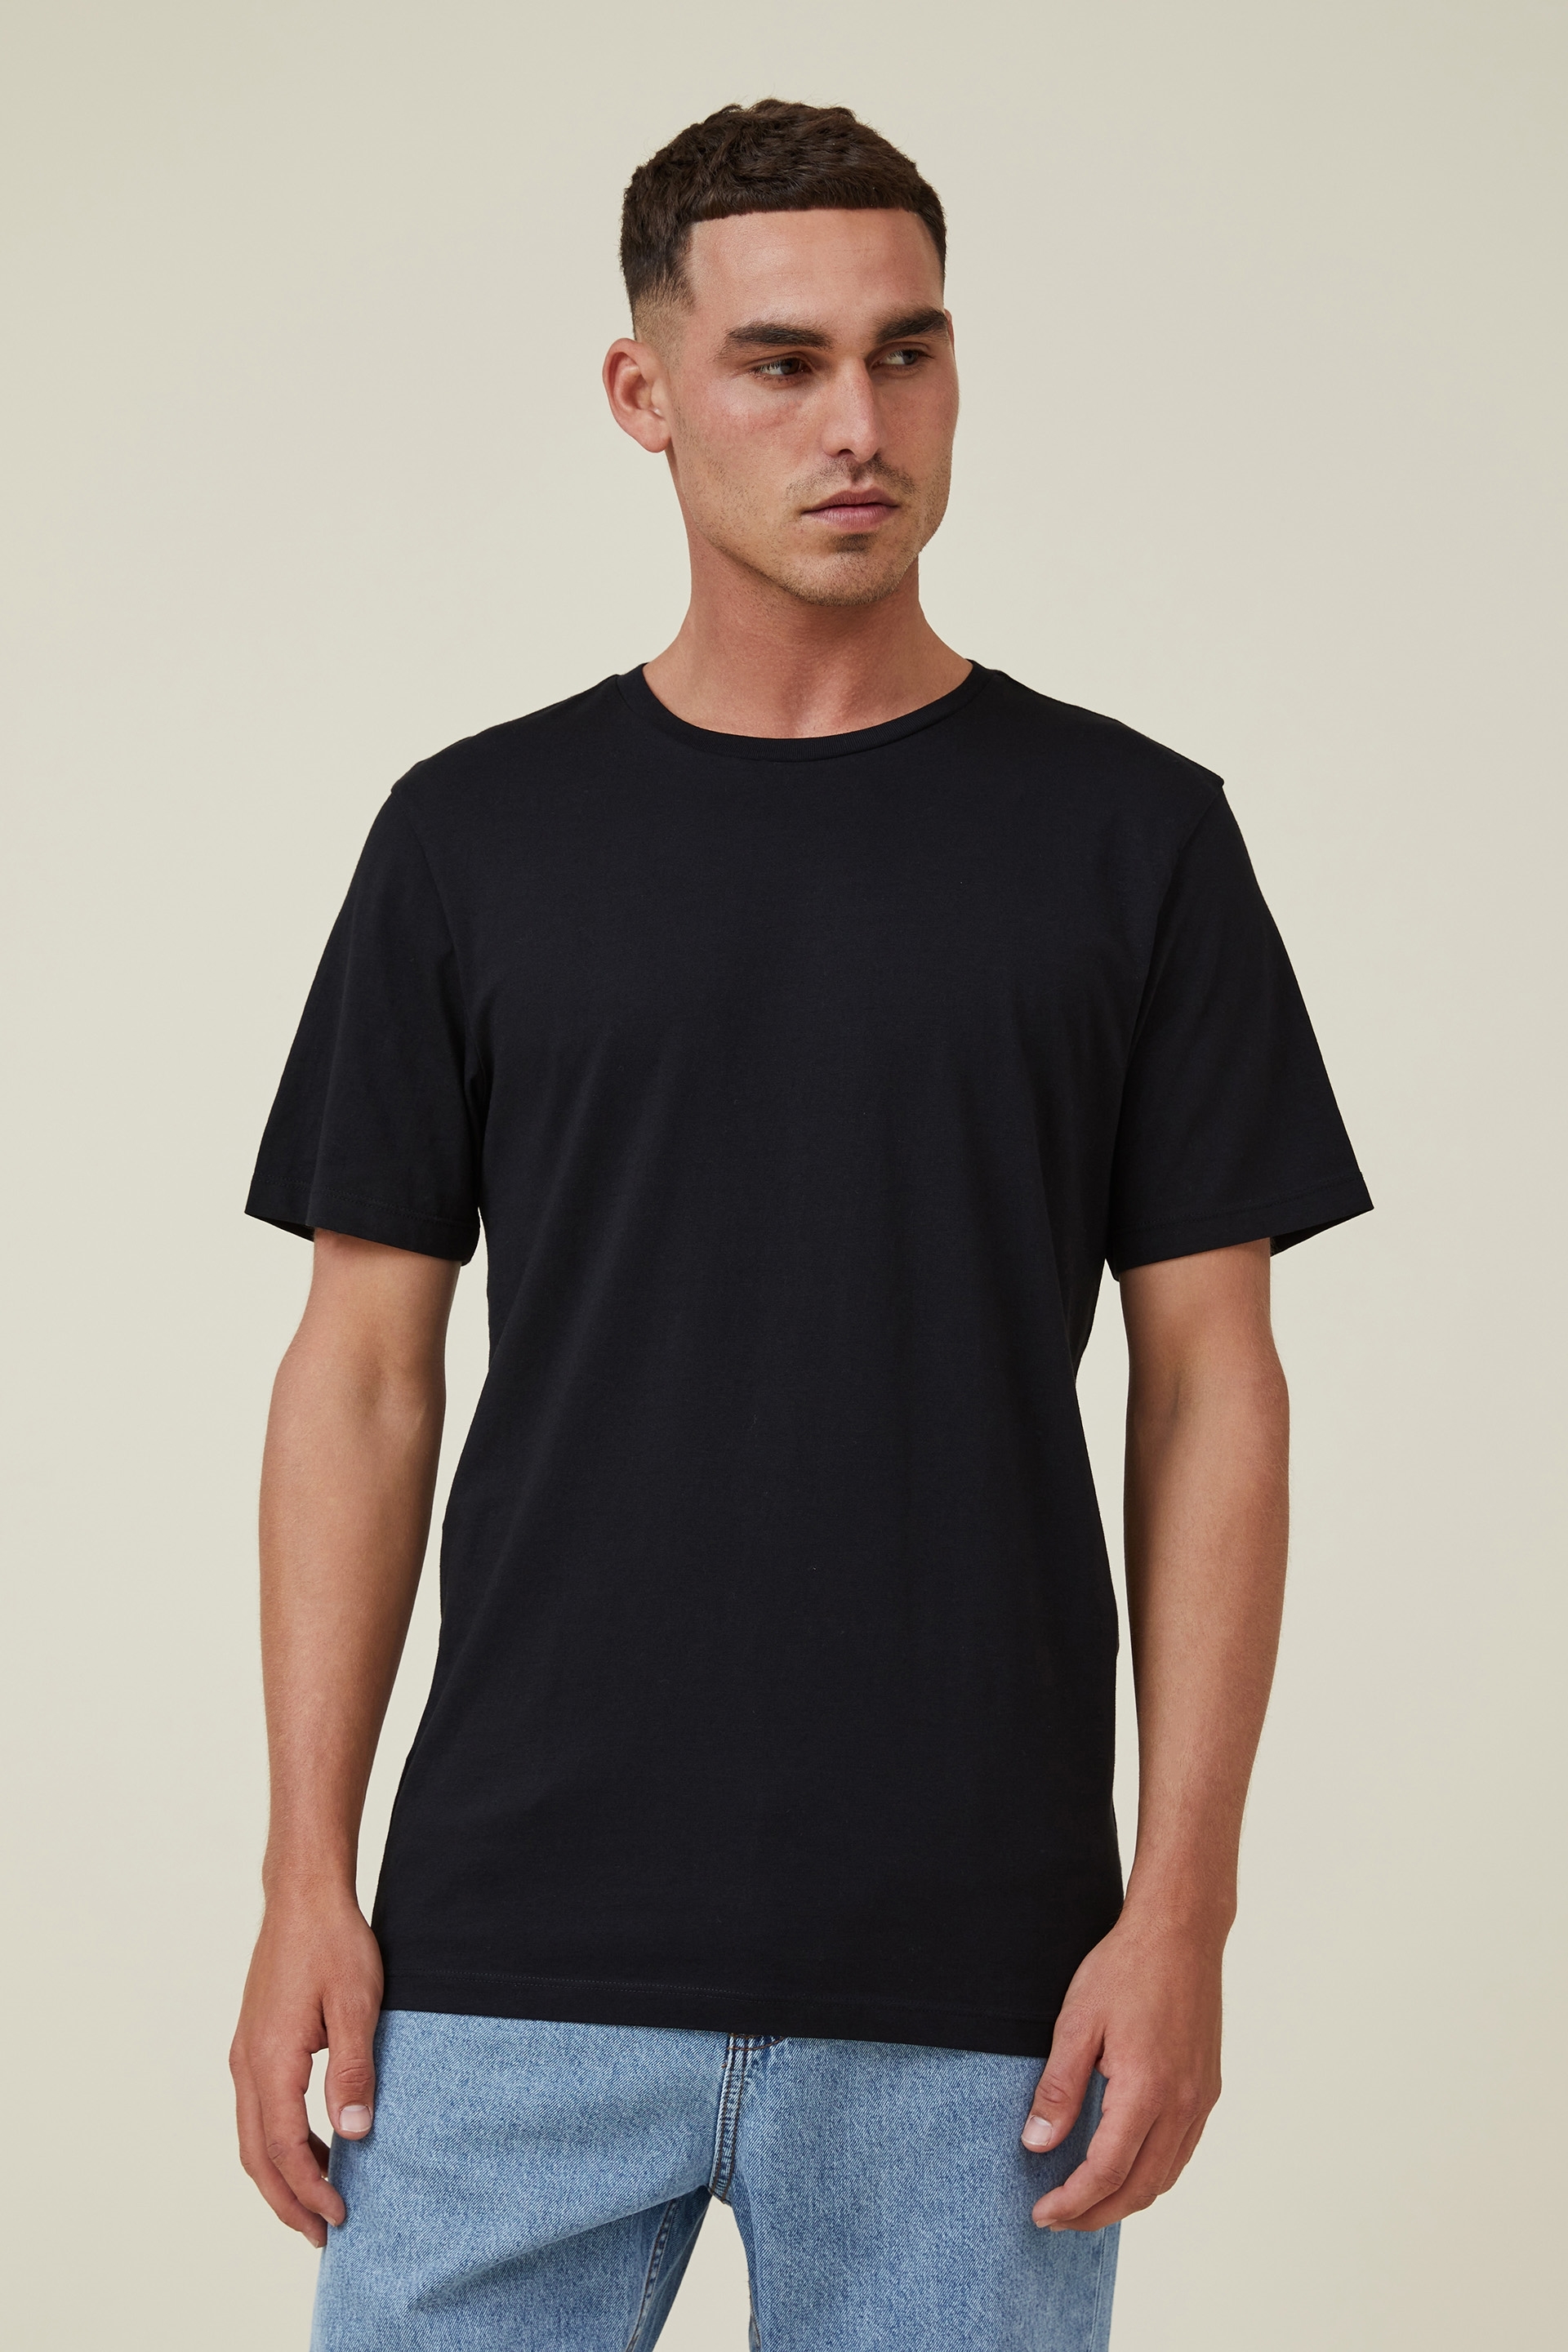 Cotton On Men - Organic Regular Fit Crew T-Shirt - Black